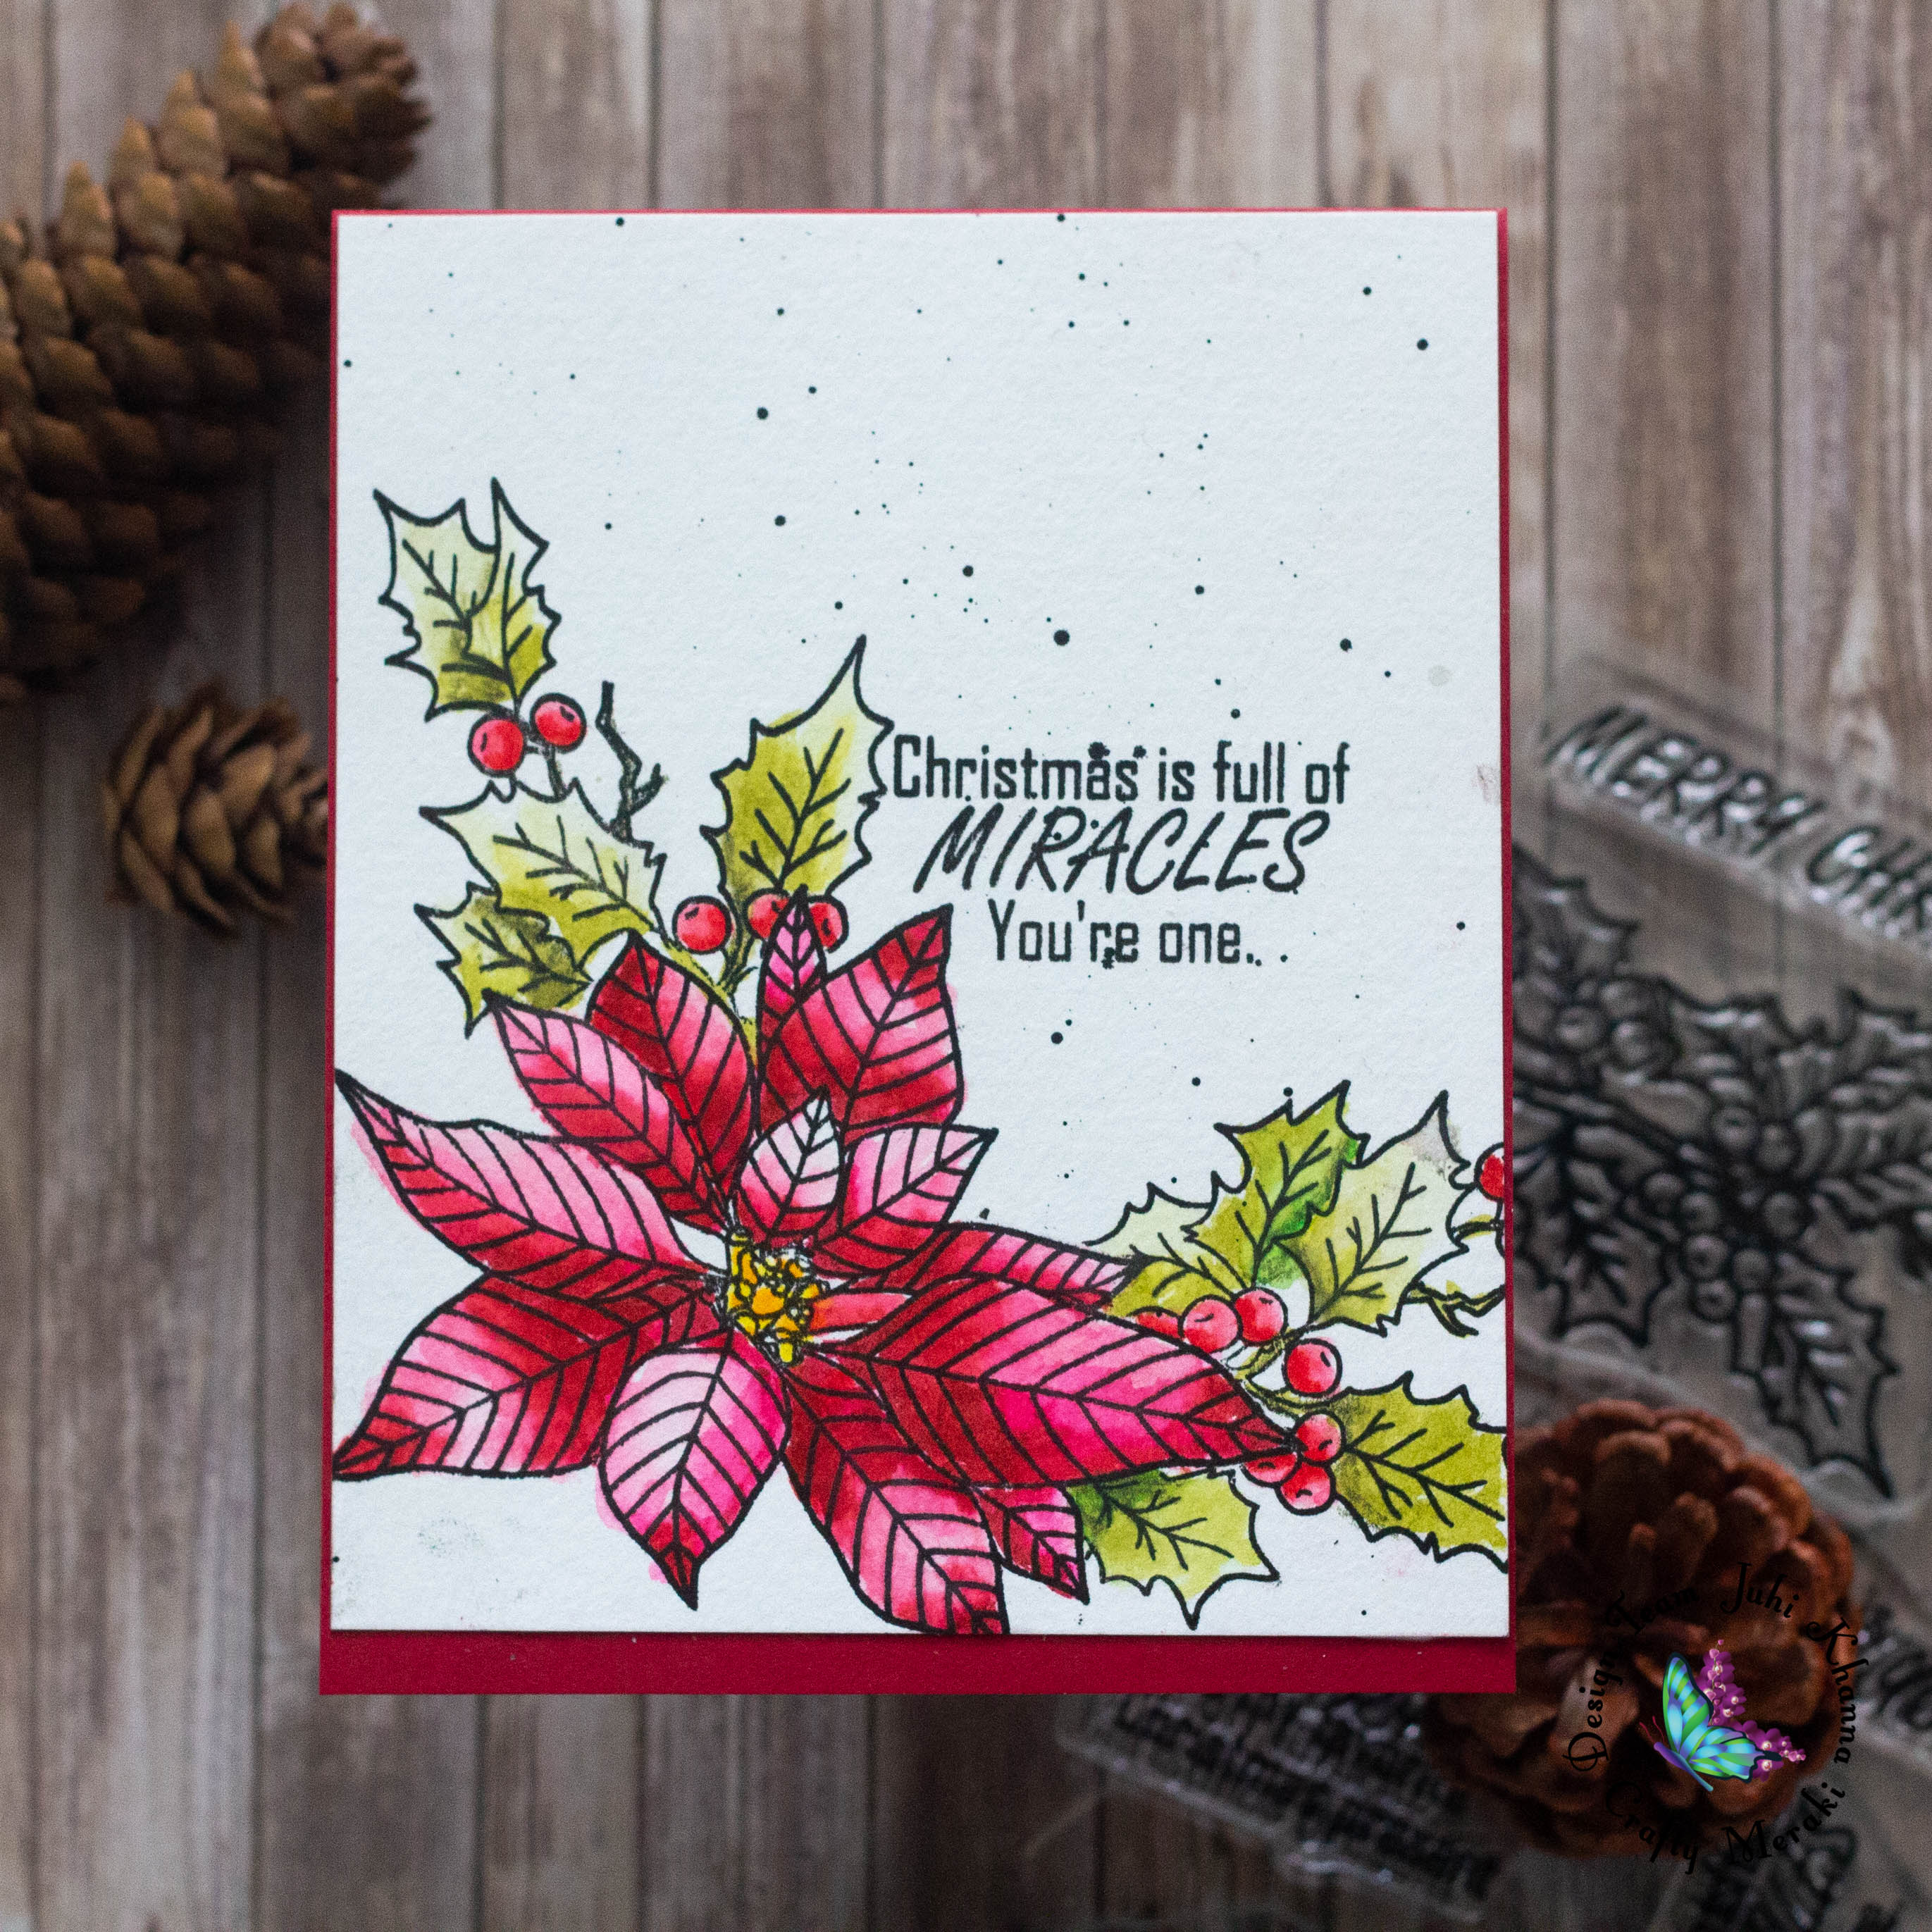 Christmas Miracle - Christmas Card by Juhi